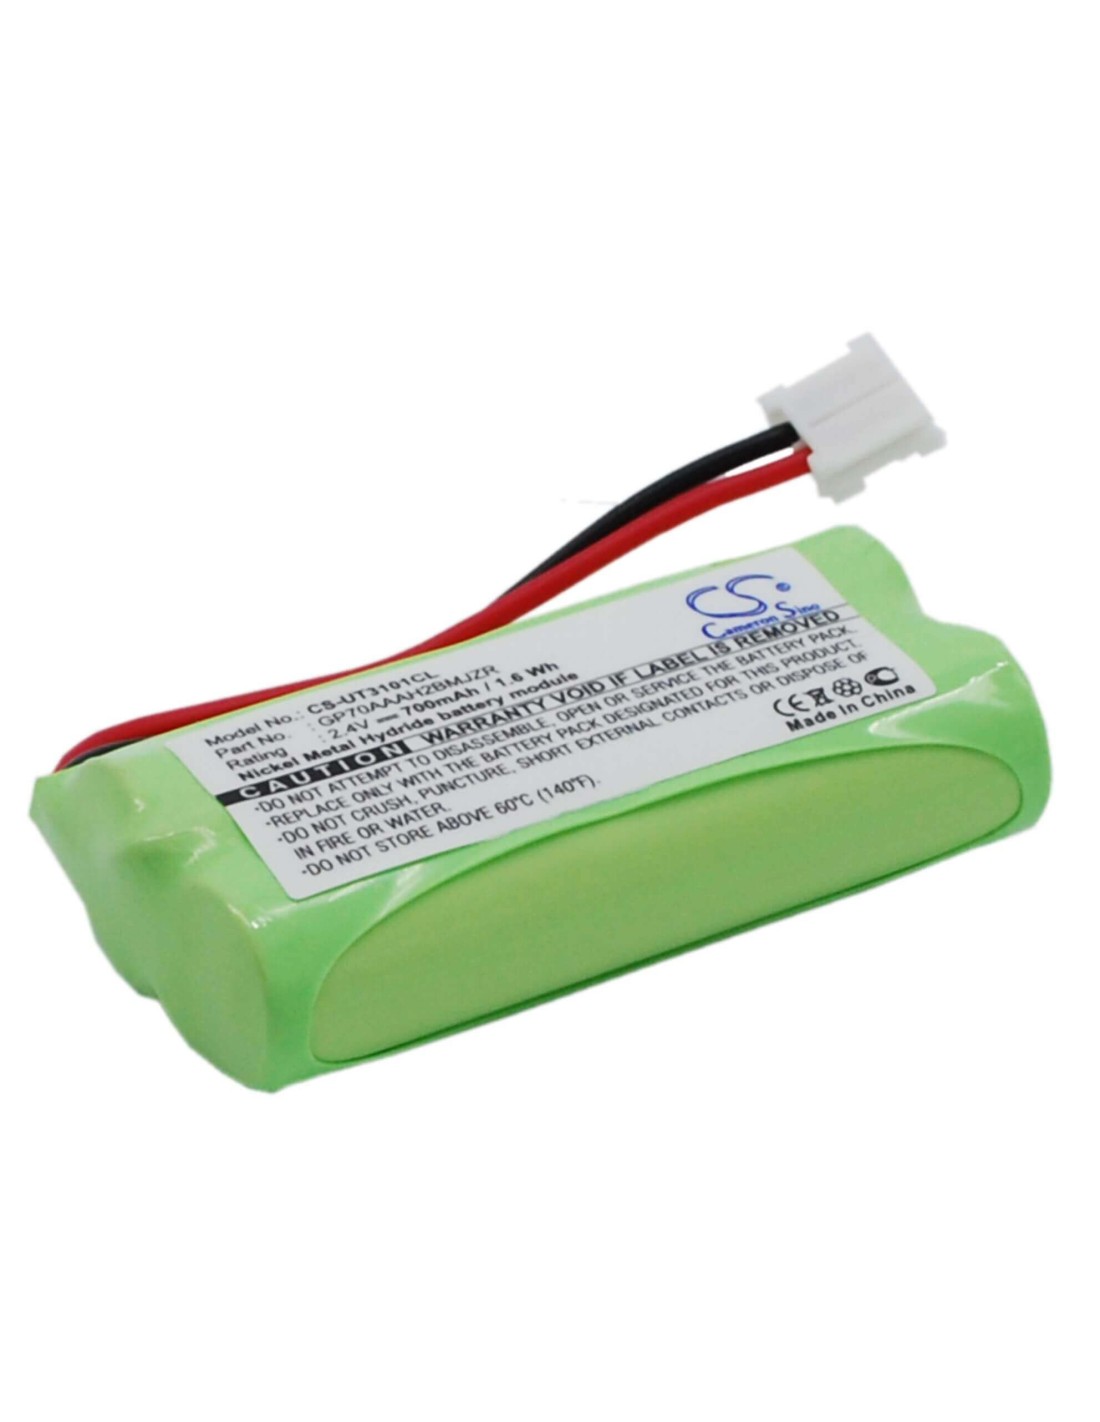 Battery for Uniden bt-101, bt1011, bt-1011, bt-1018 2.4V, 700mAh - 1.68Wh